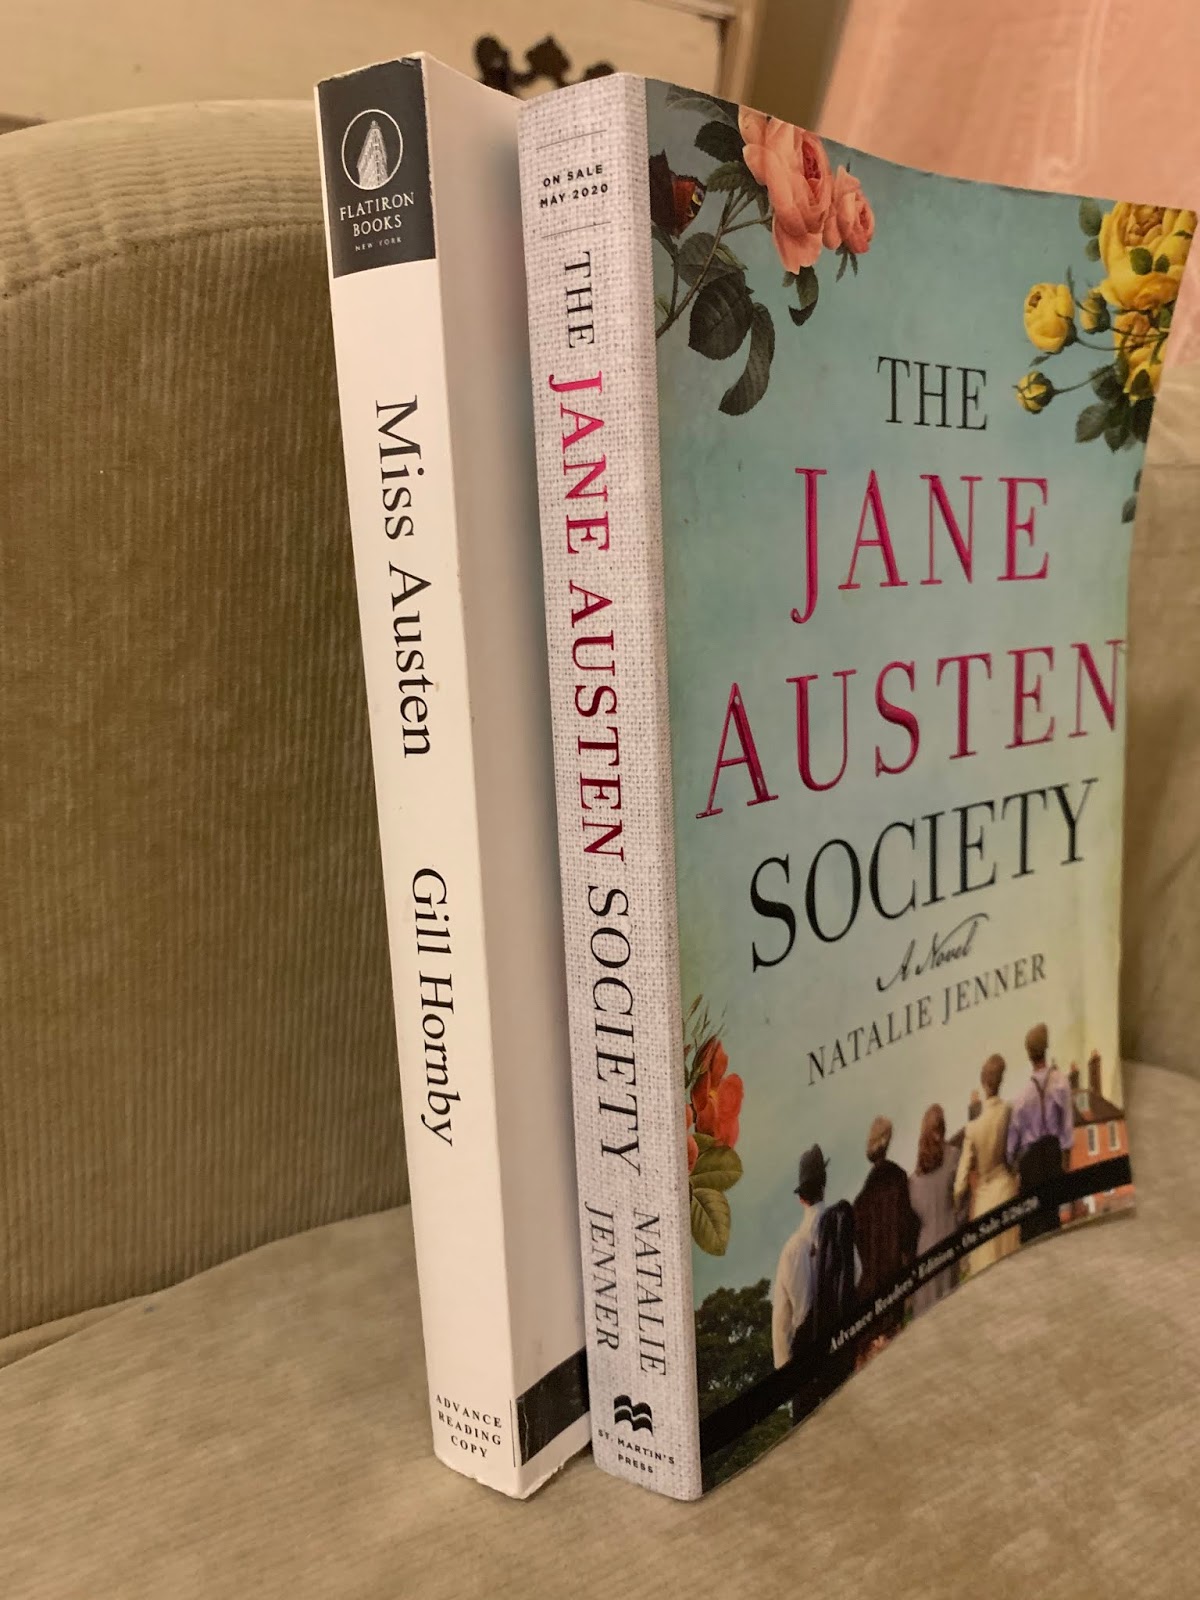 The Secret Victorianist: Austen in 2020: Miss Austen by Gill Hornby and The  Jane Austen Society by Natalie Jenner